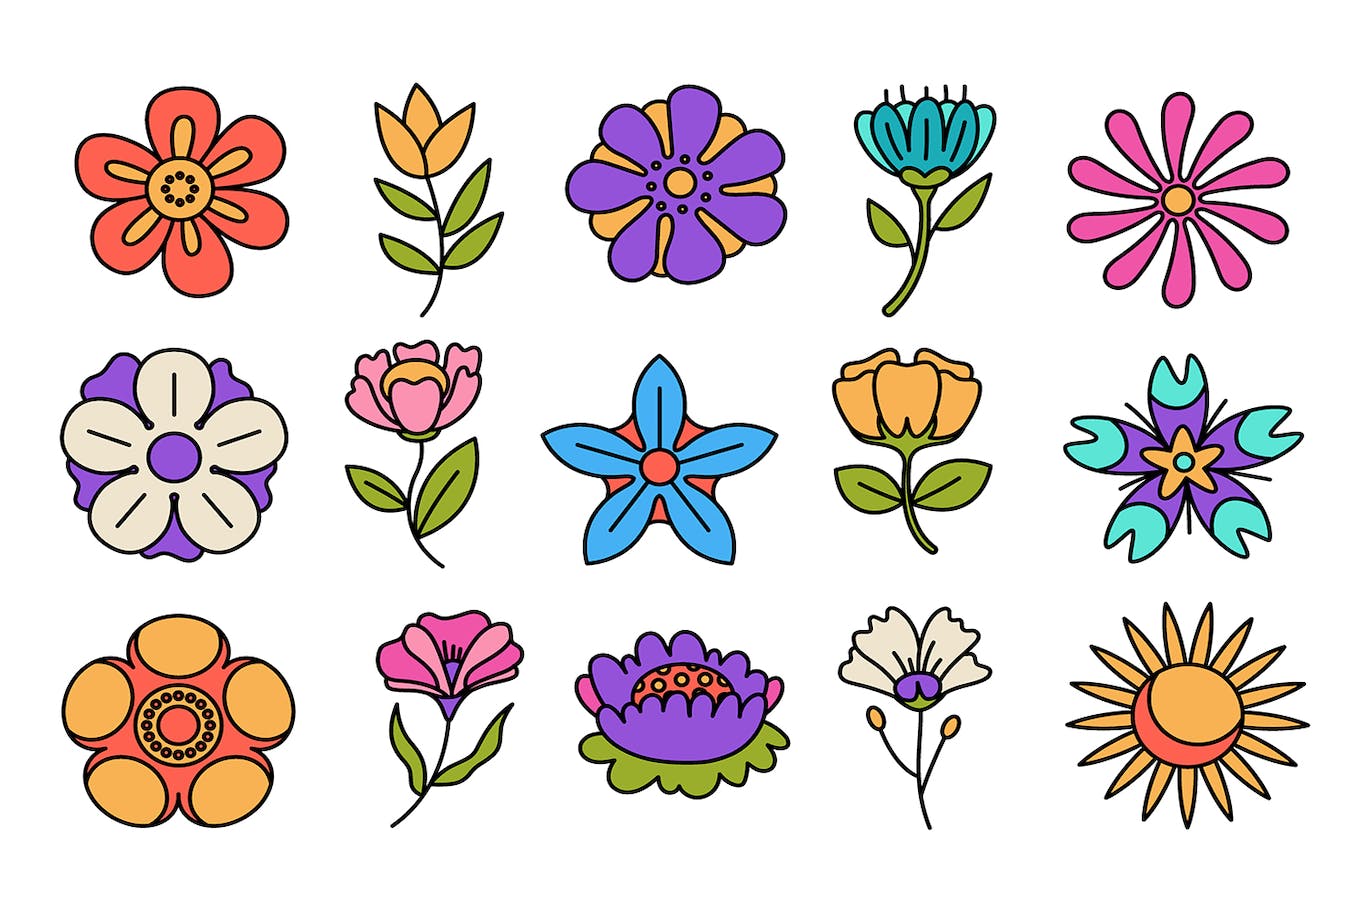 春天花朵矢量插画集 Spring Flower Illustration Set-2